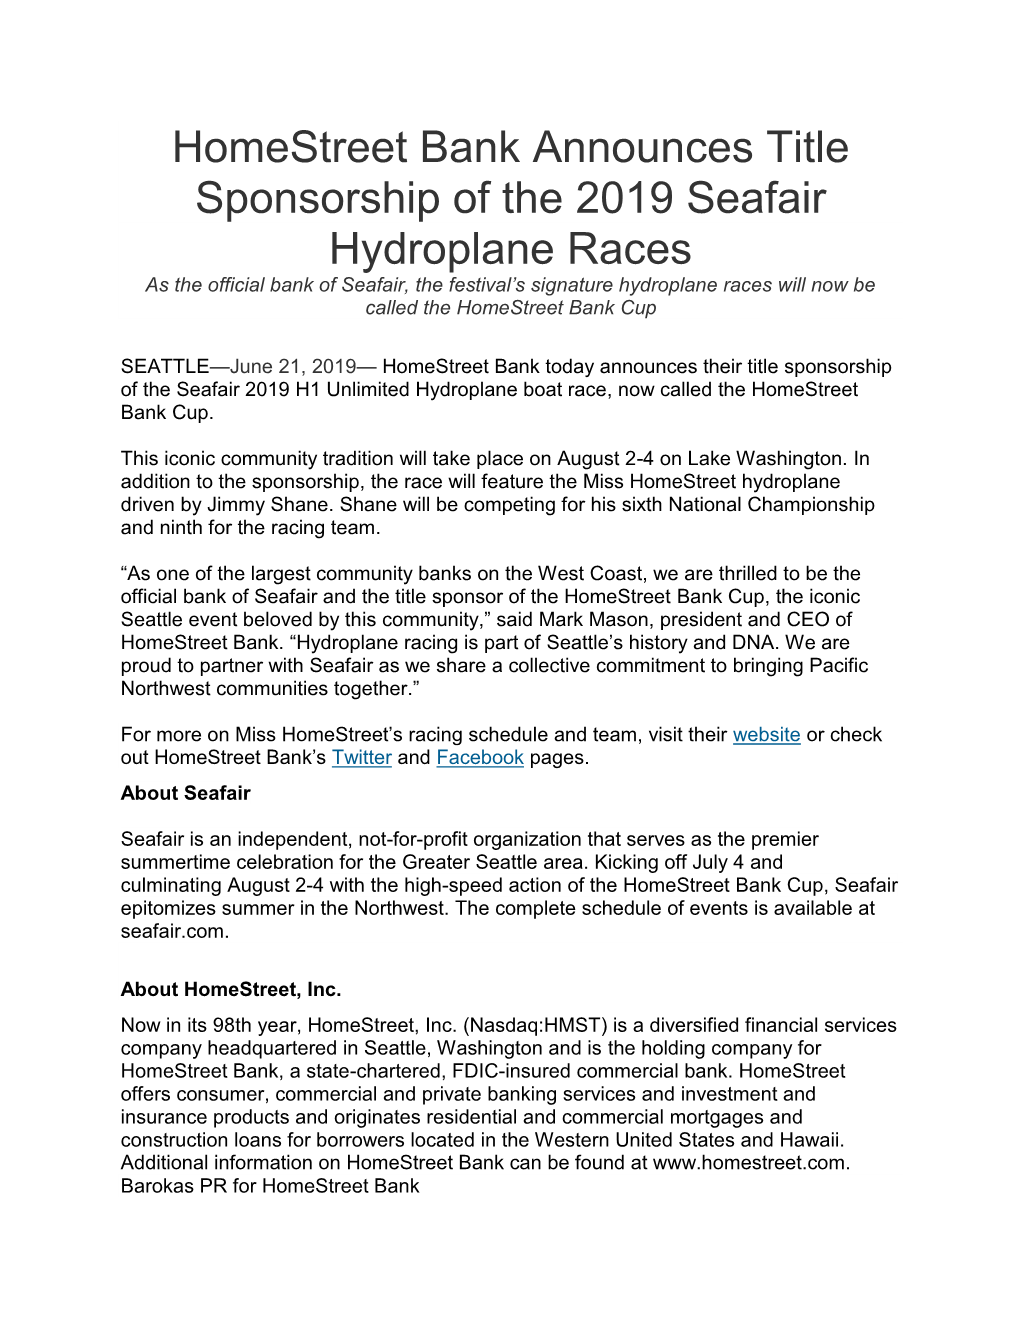 Homestreet Bank Announces Title Sponsorship of the 2019 Seafair